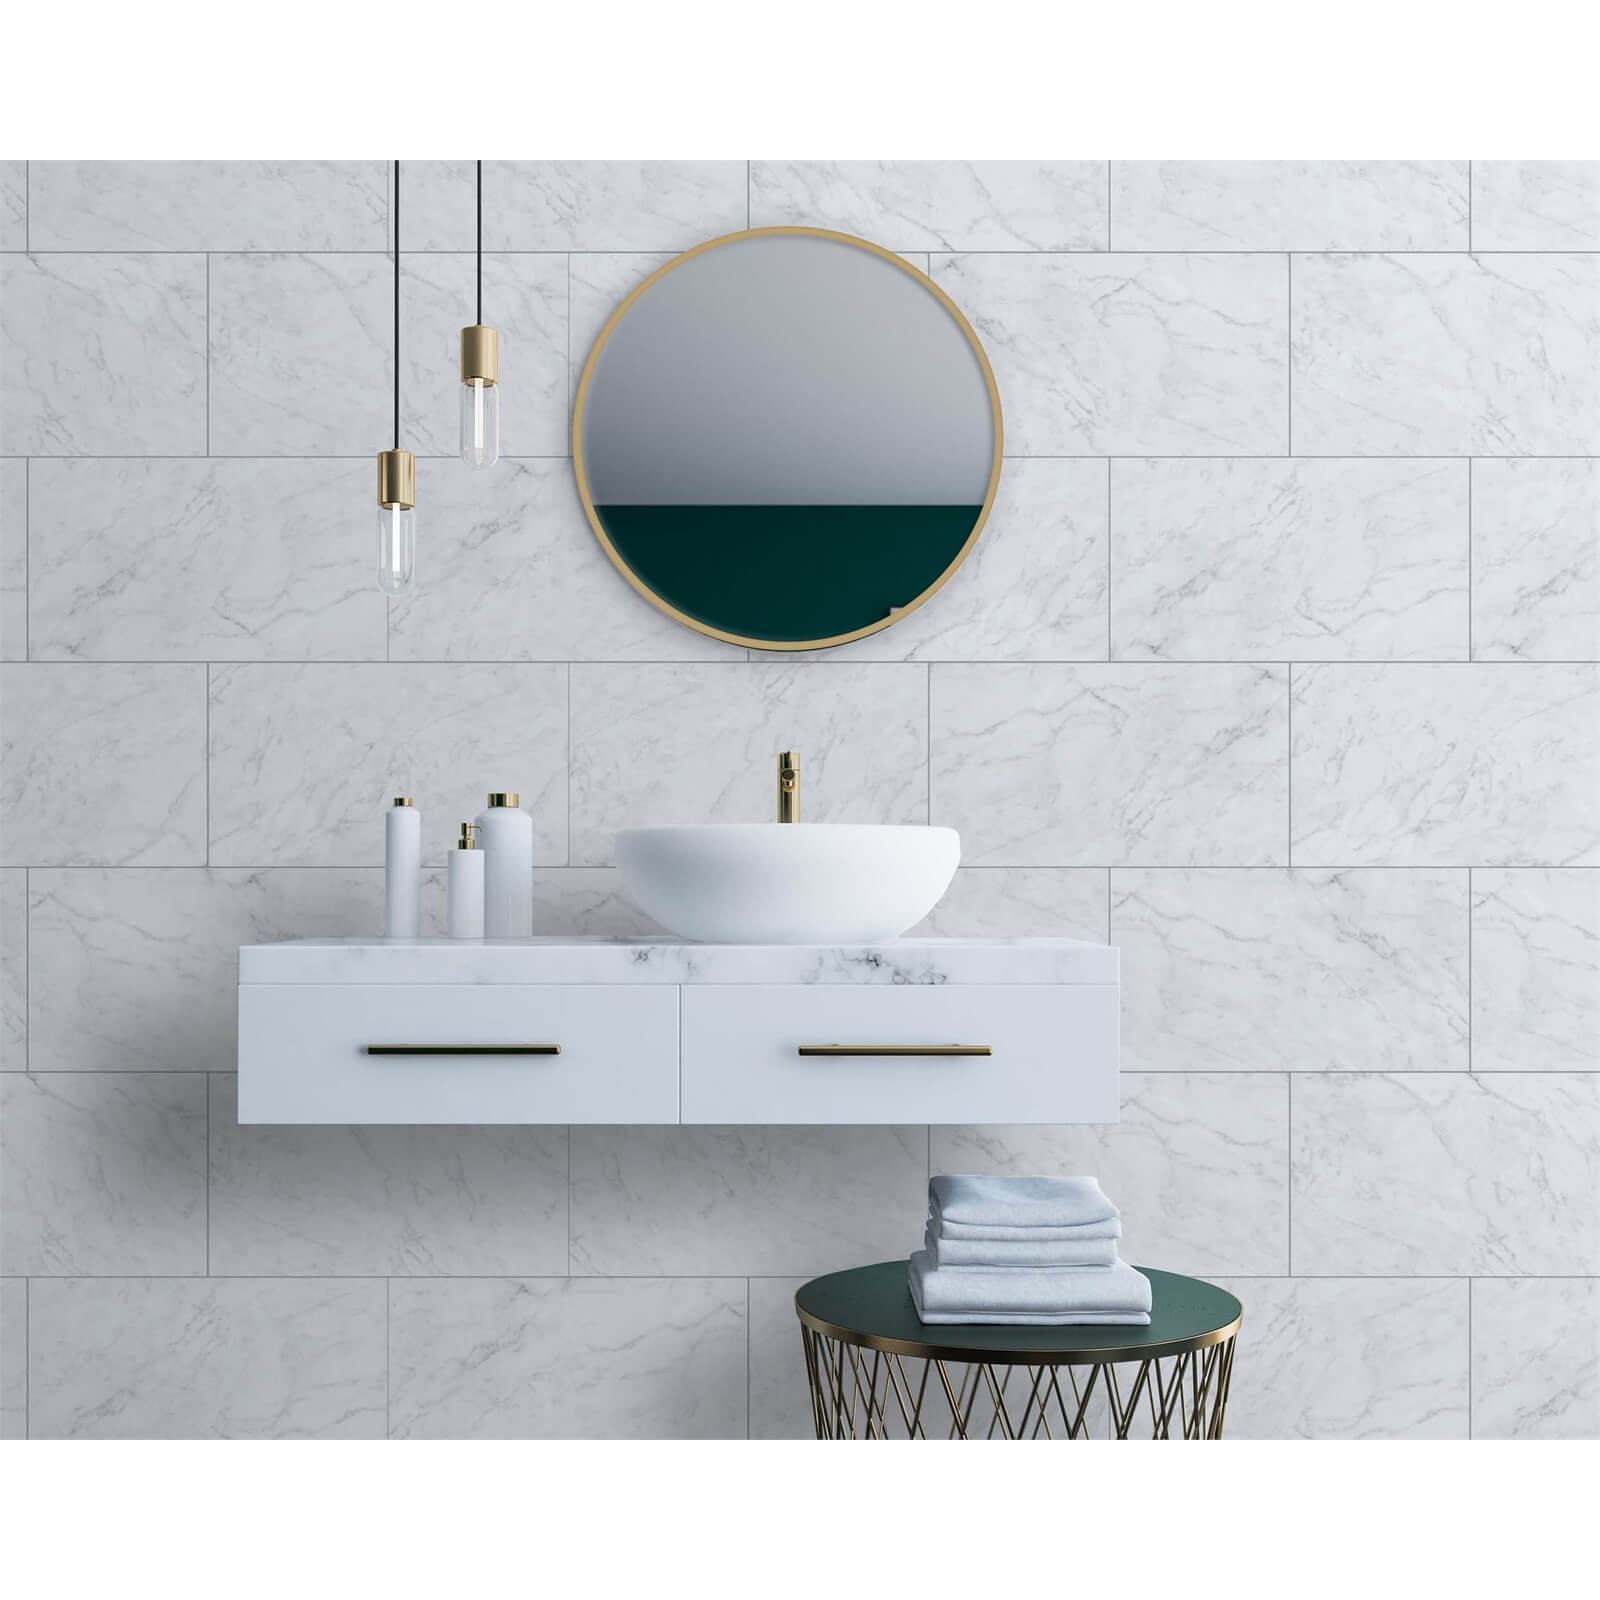 Innovera Decor Decorative Shower & Bathroom Wall Tiles (Carrara Marble, Set of 8)